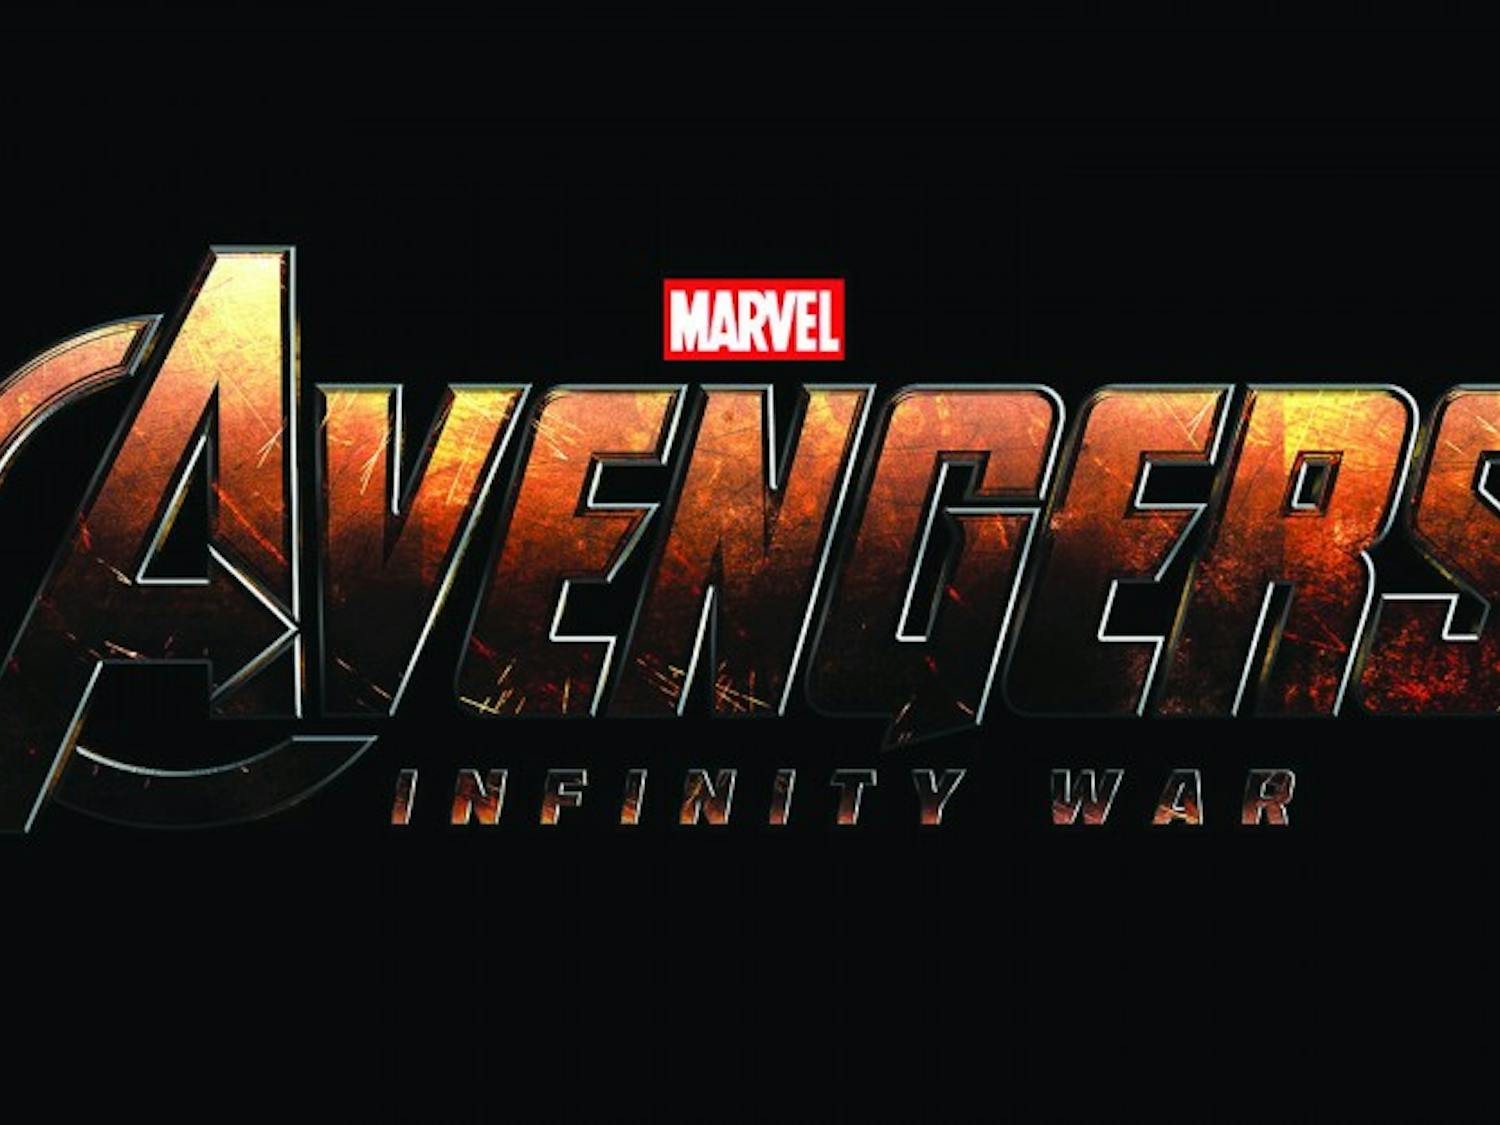 AvengersInfinityWar_wikimedia.jpg